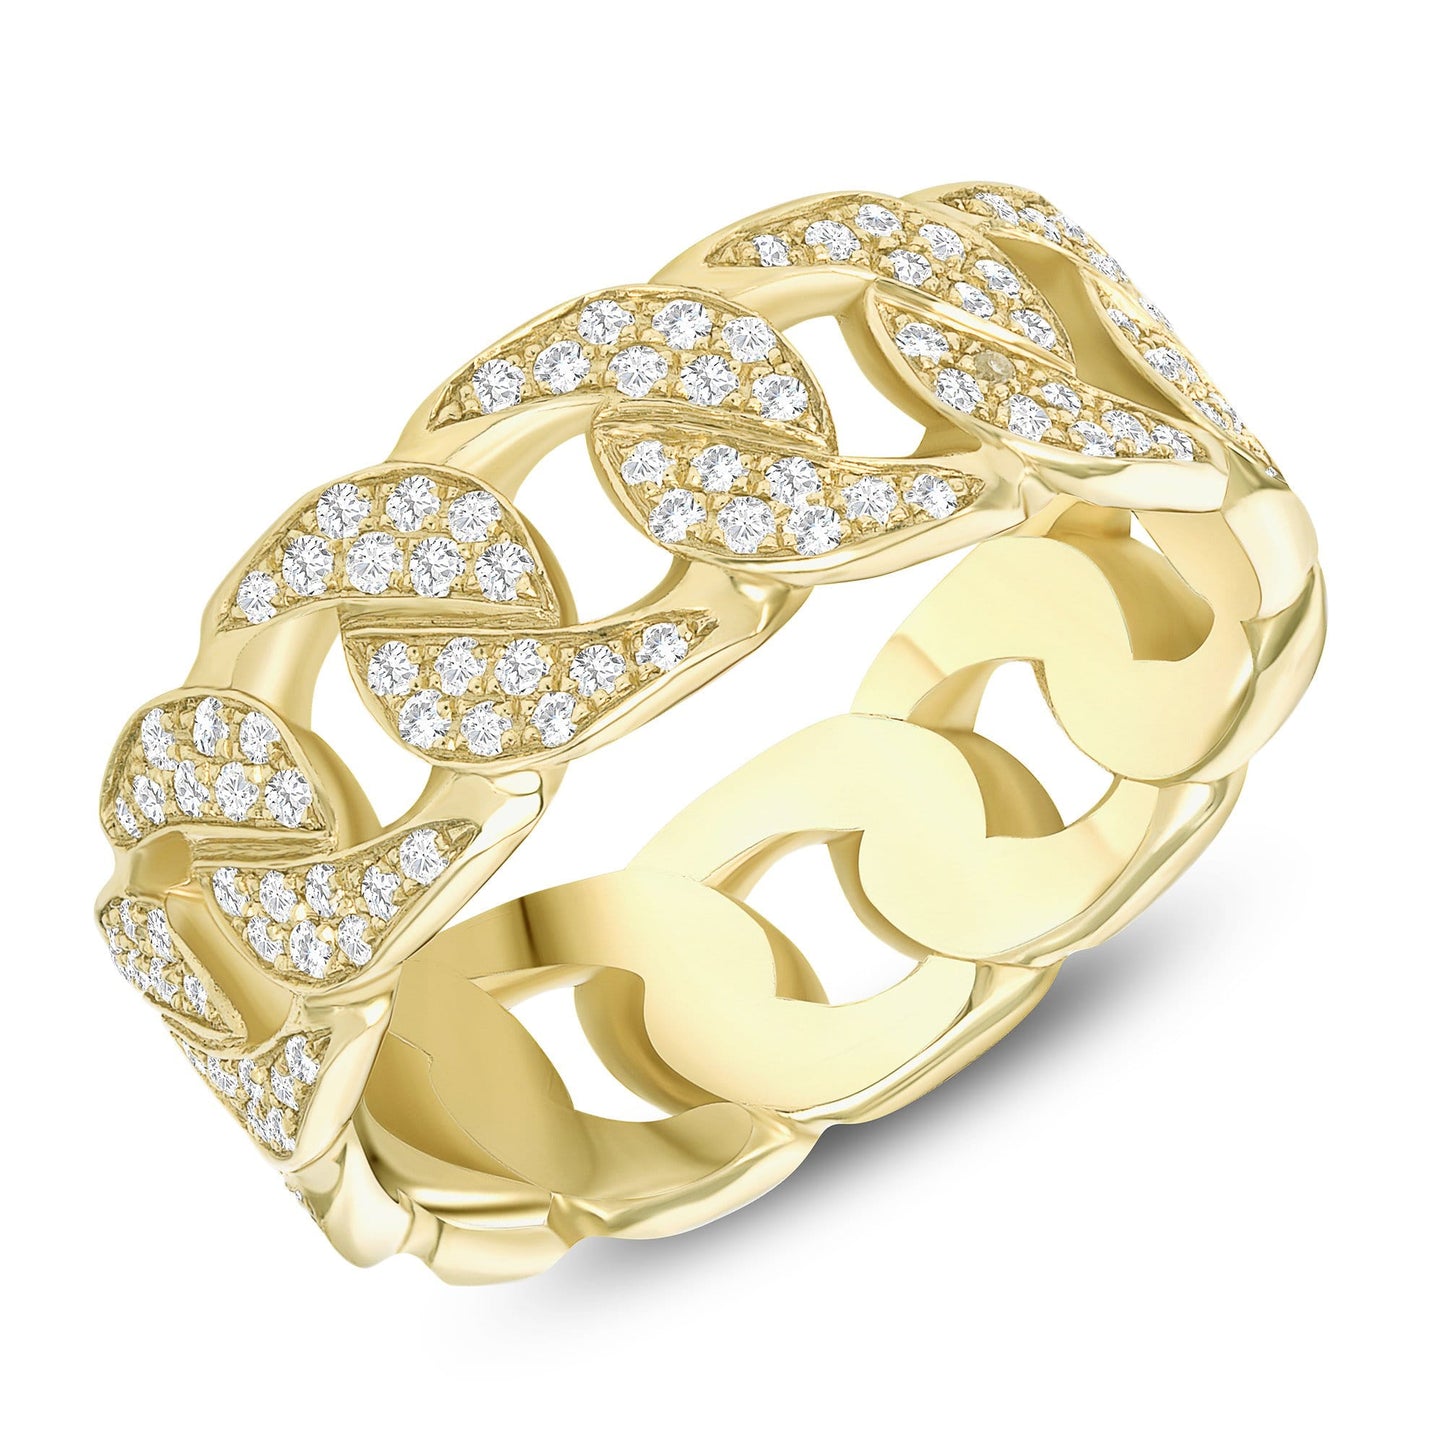 Cuban Link Cocktail Rings for Women 18K Gold Diamond Rings 1.00 CT TW  (G,VS1) - Walmart.com